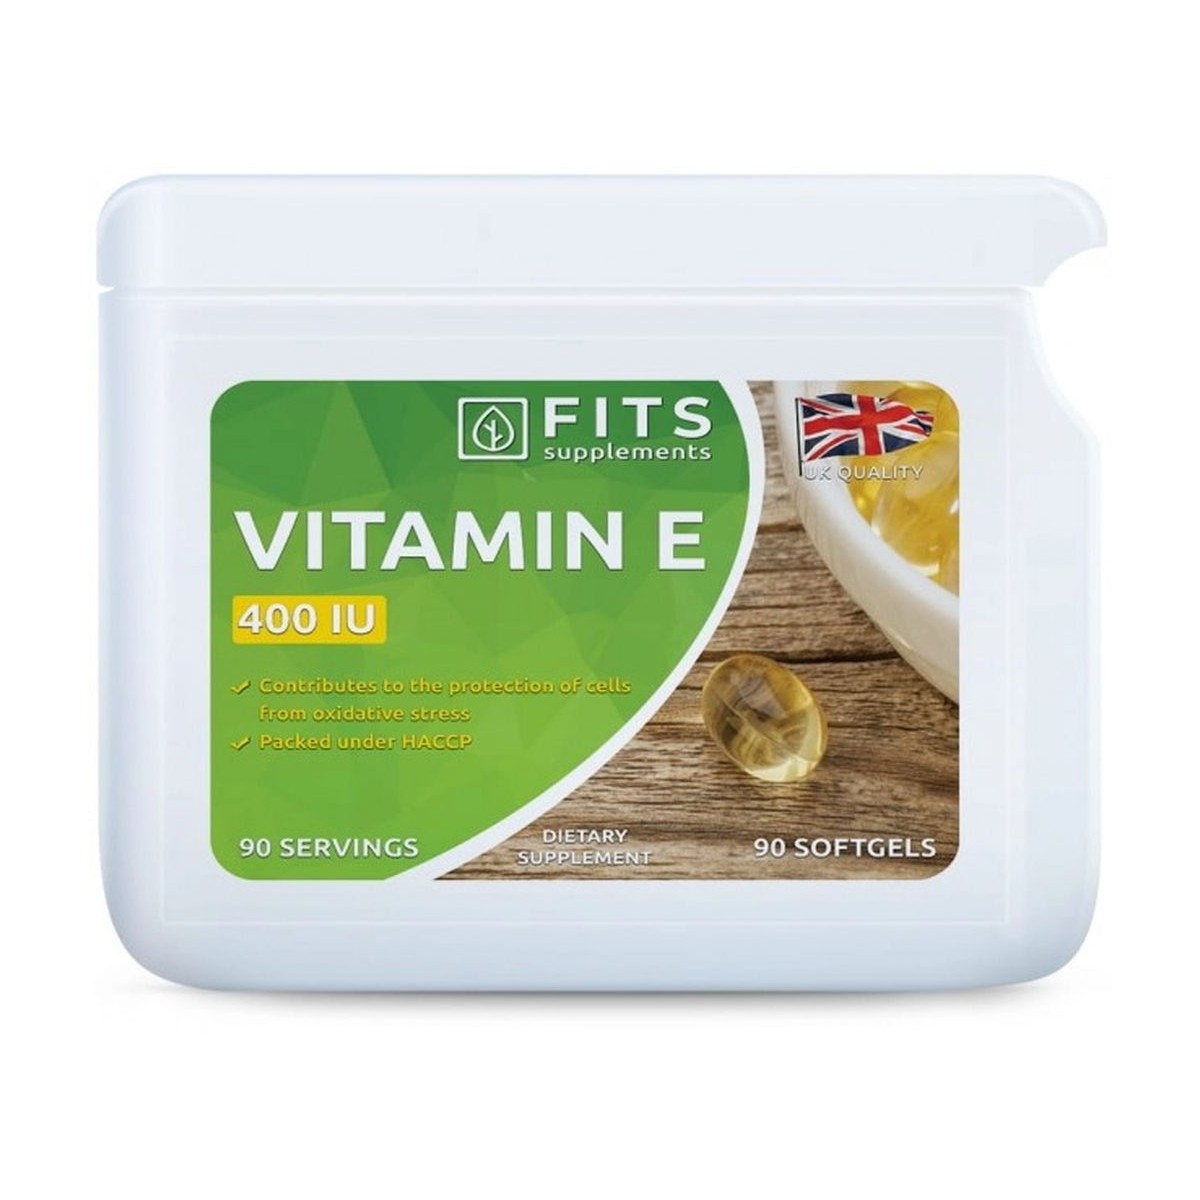 Nutricosmética - Suplementos al mejor precio: Vitamina E 400IU 90 softgels de FITS Supplements en Skin Thinks - 